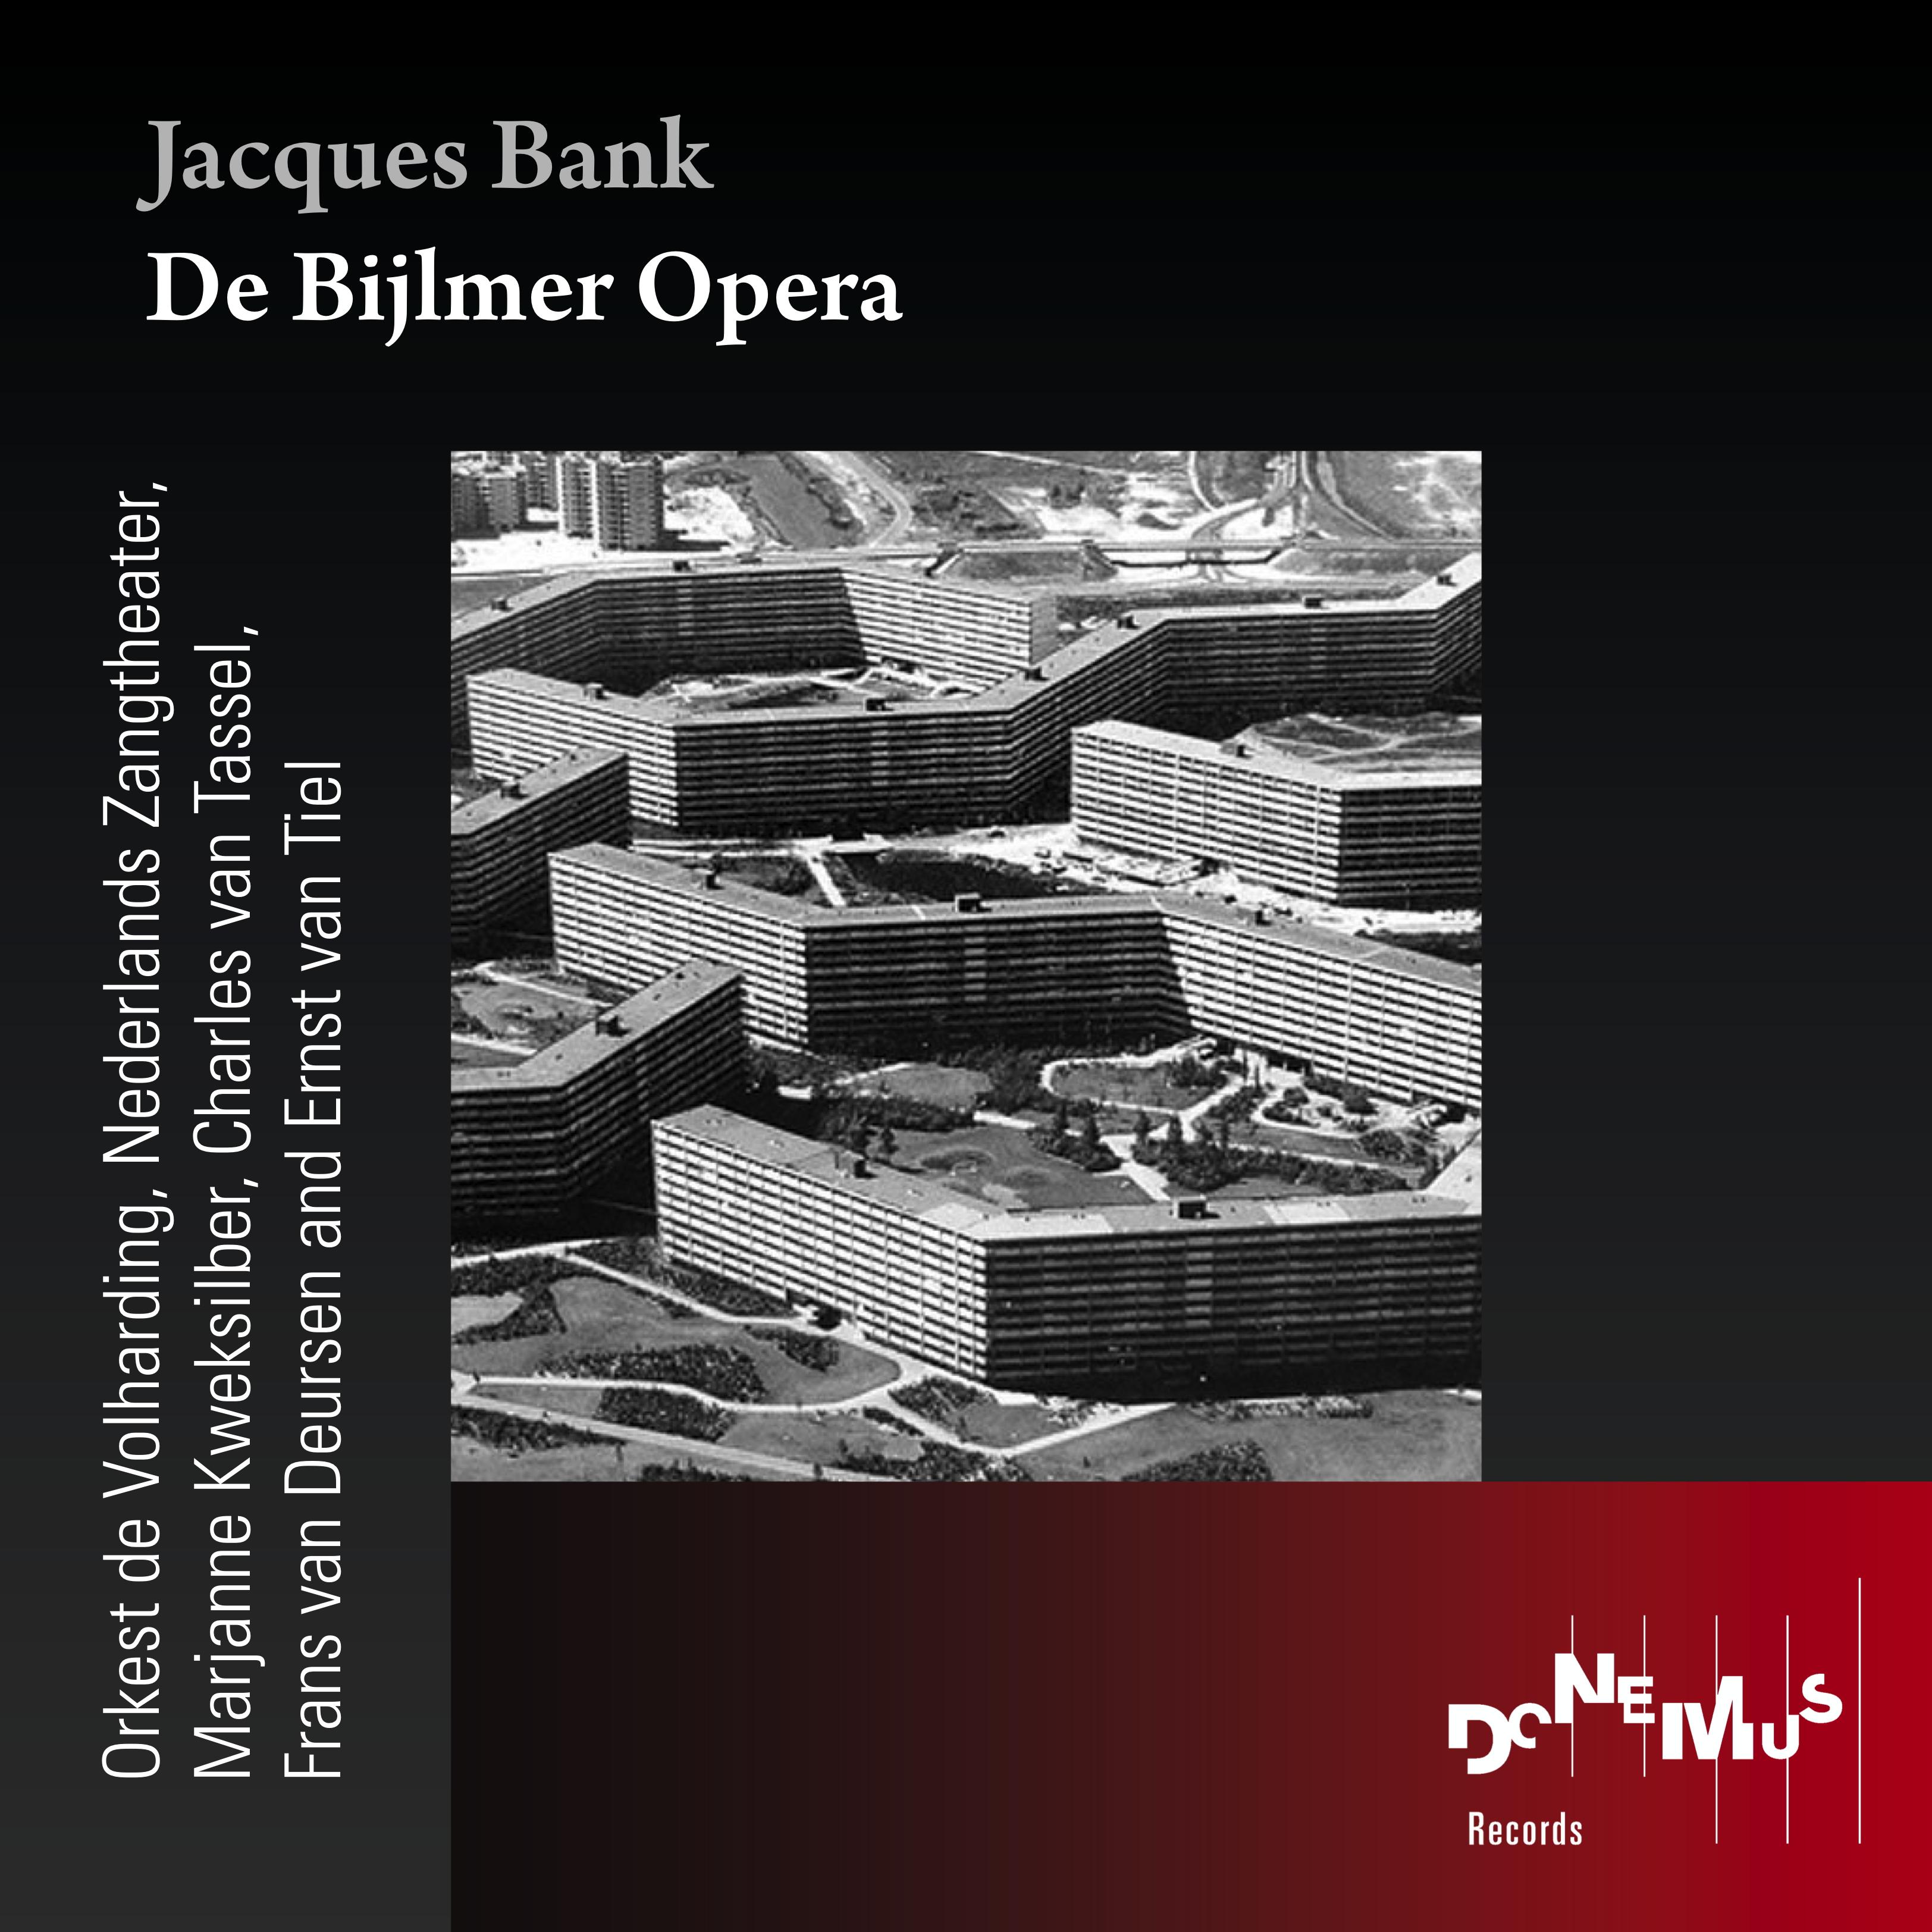 Orkest De Volharding - De Bijlmer Opera, Scene 2 